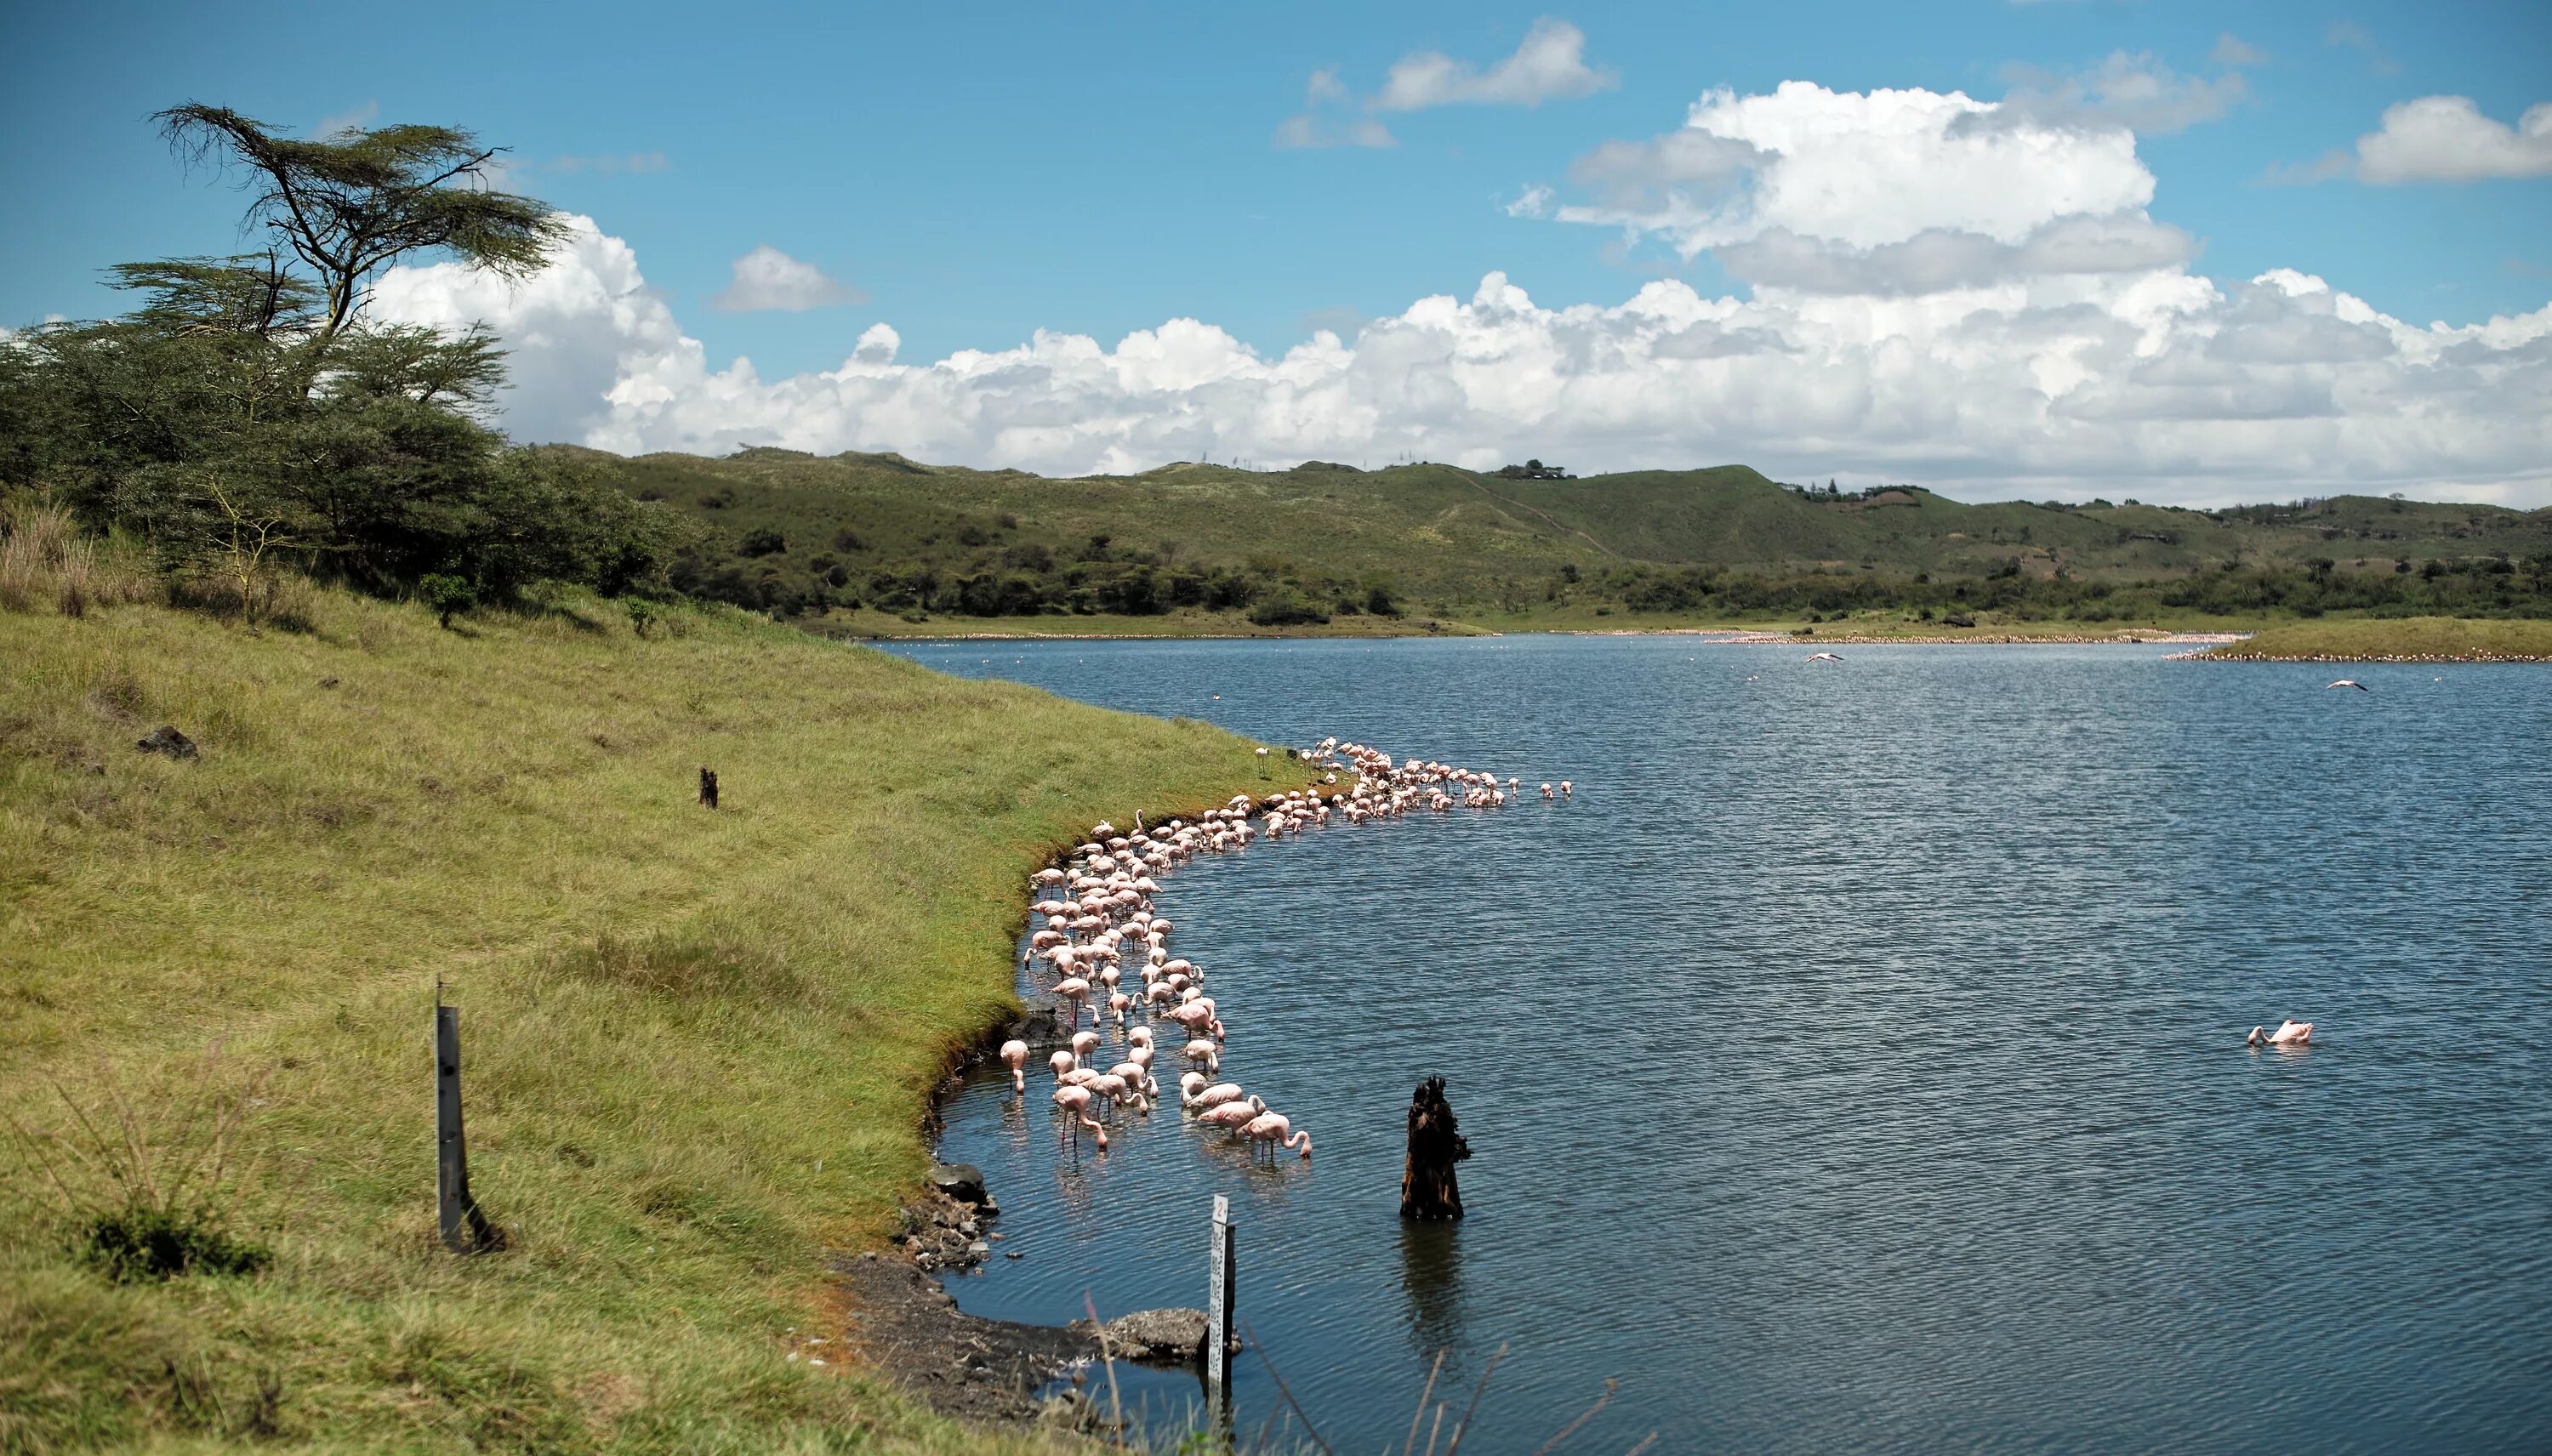 Танзания озеро Танганьика. Озеро Ньяса в Танзании. Озеро Танганьика национальный парк. Озеро ливингстона африка